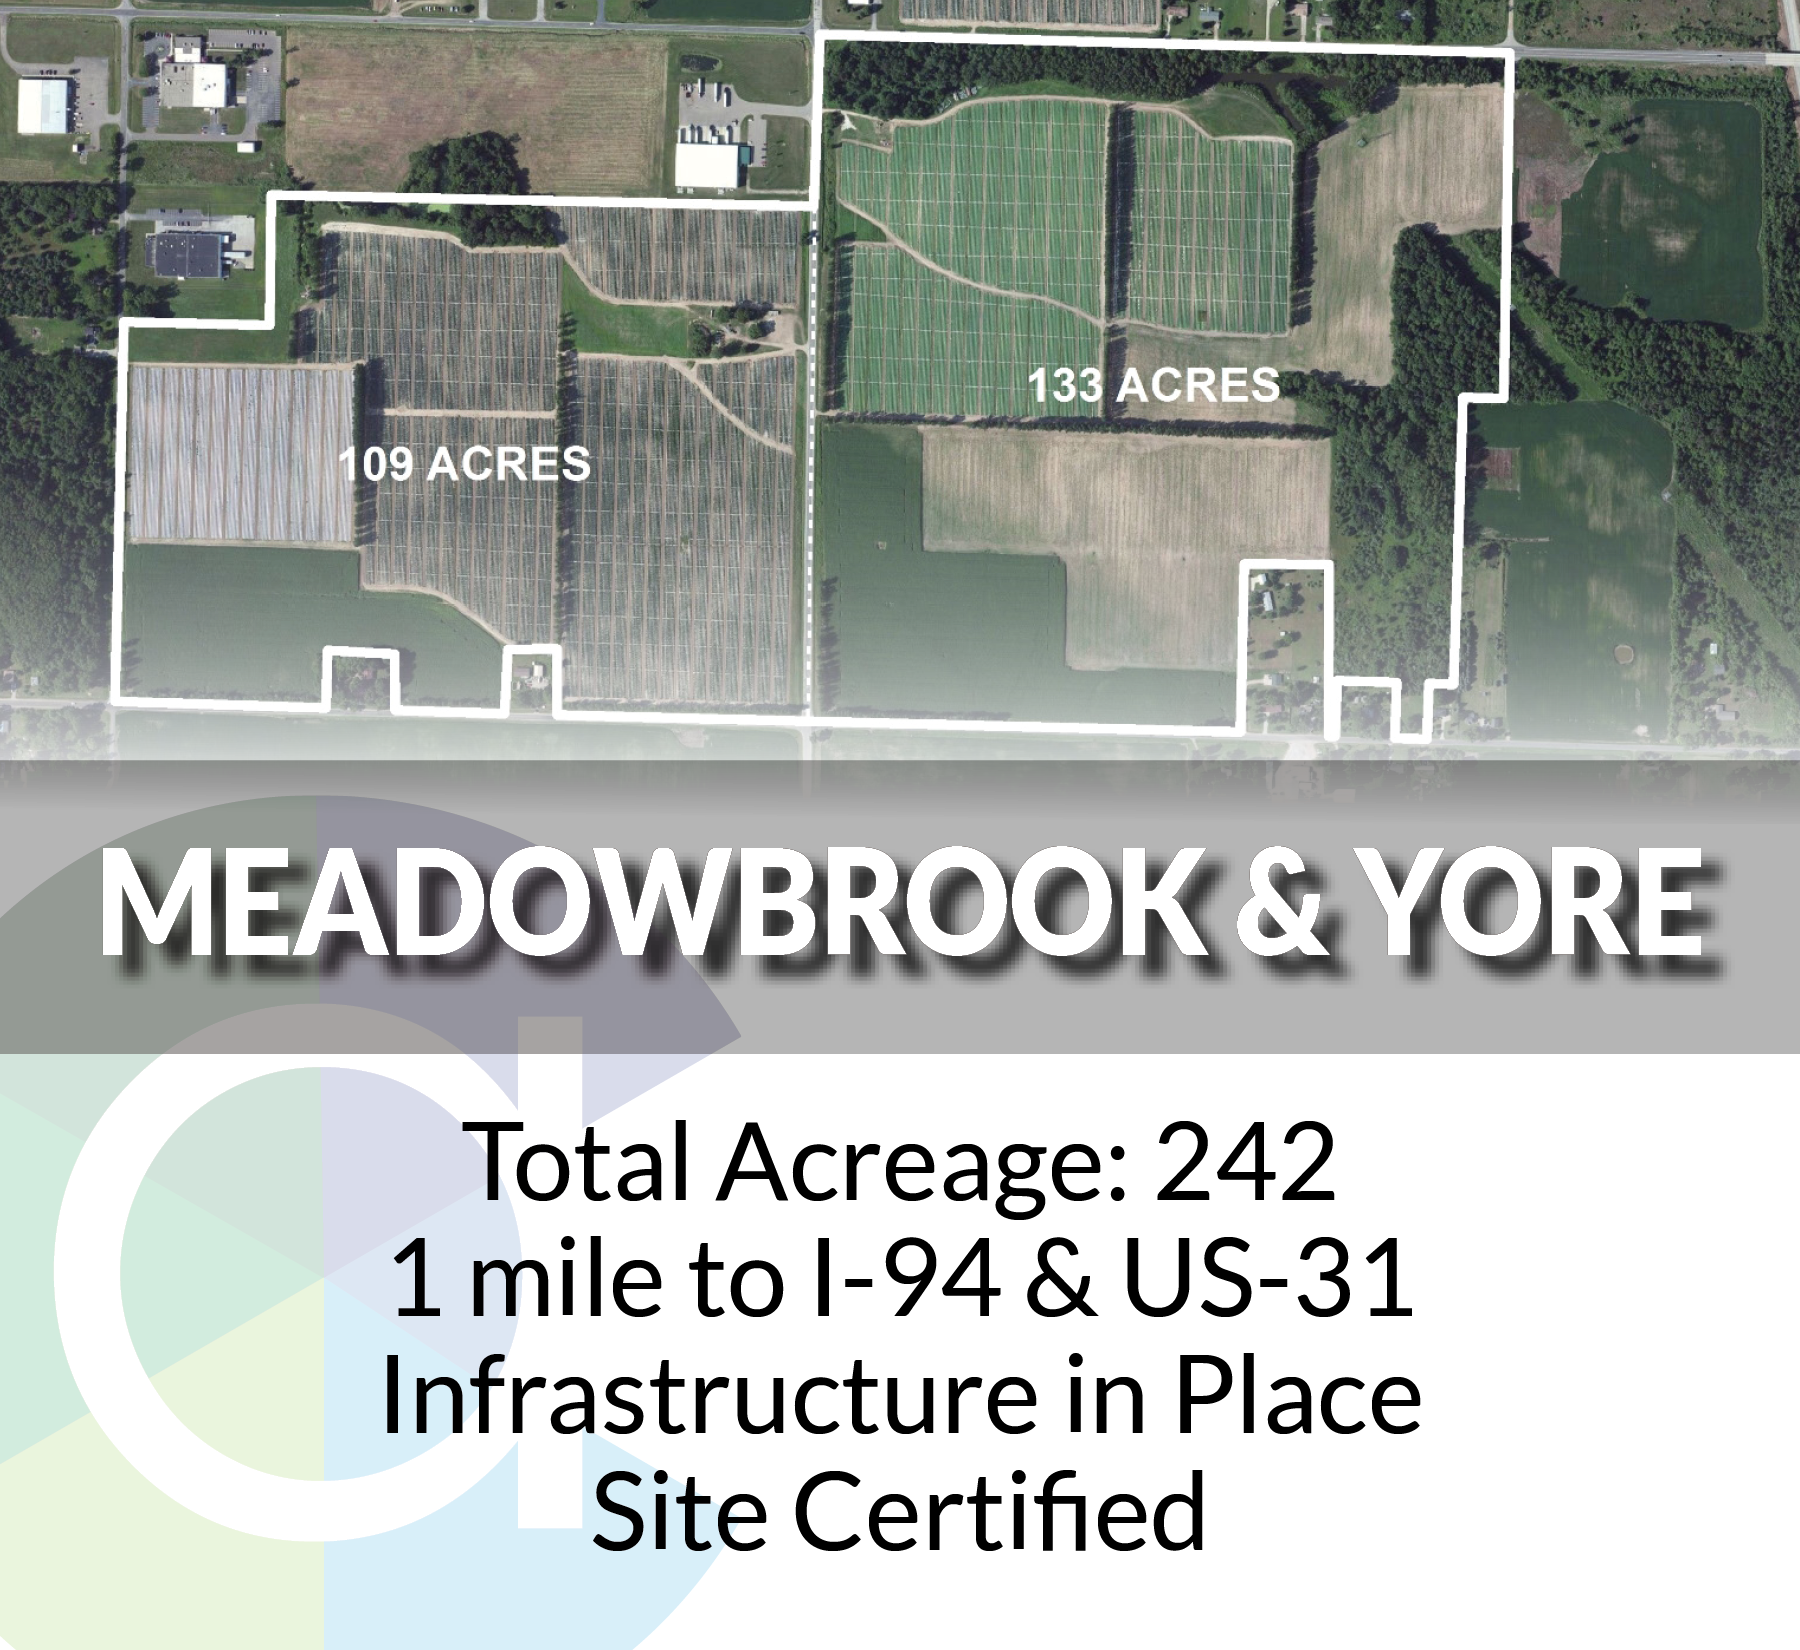 Meadowbrook Yore